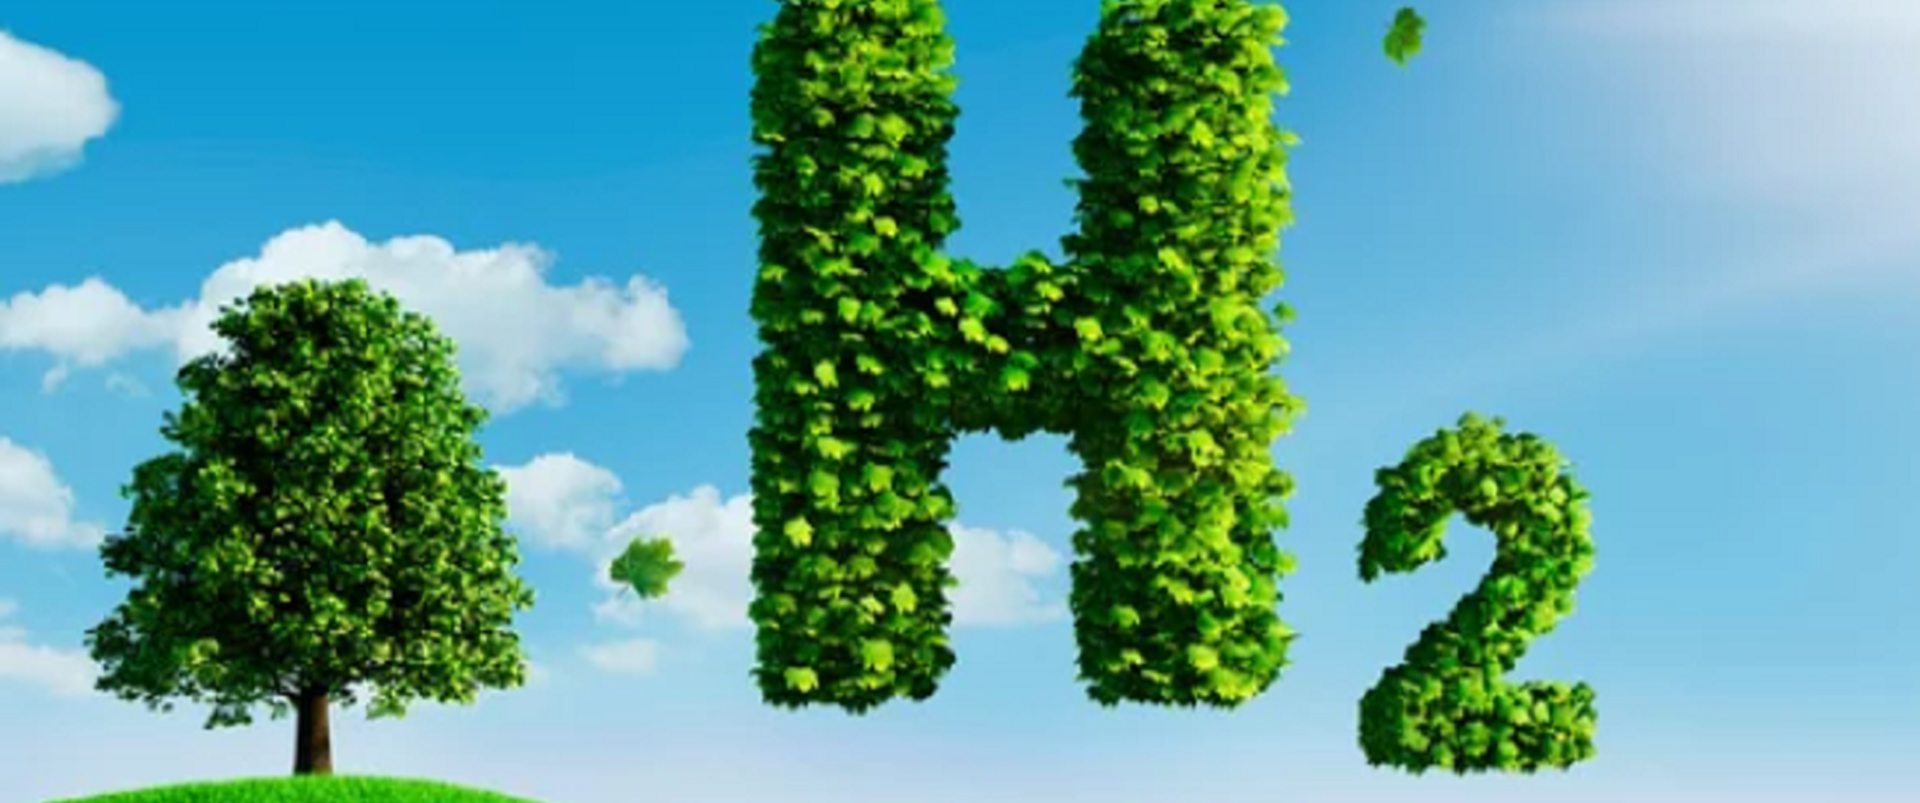 H2 symbol made of leaves